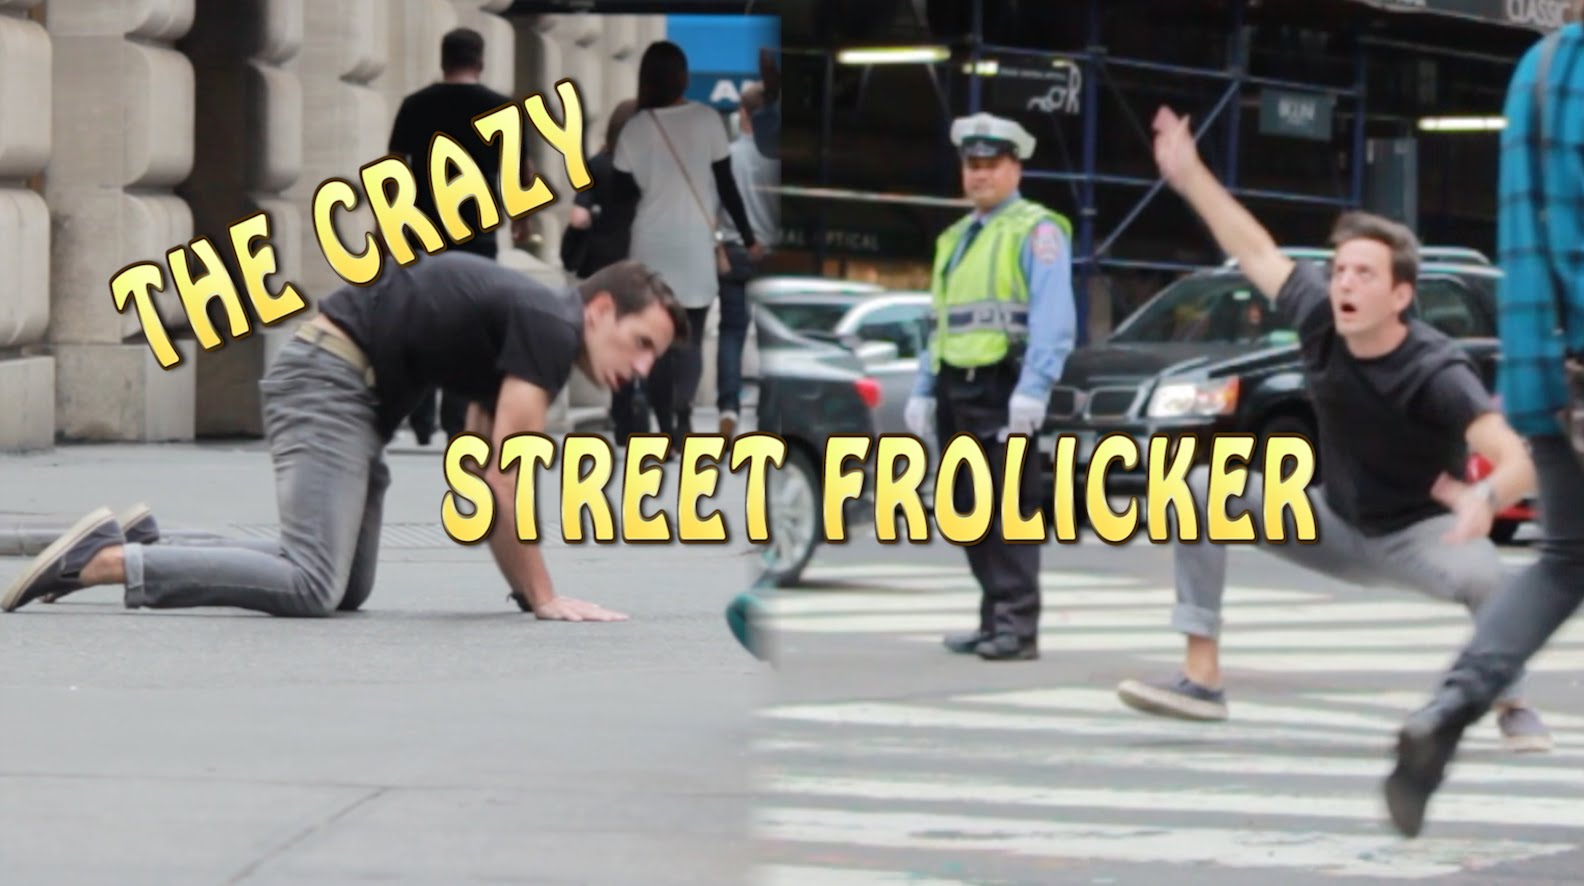 Nuova moda: Attraversare la strada ballando!